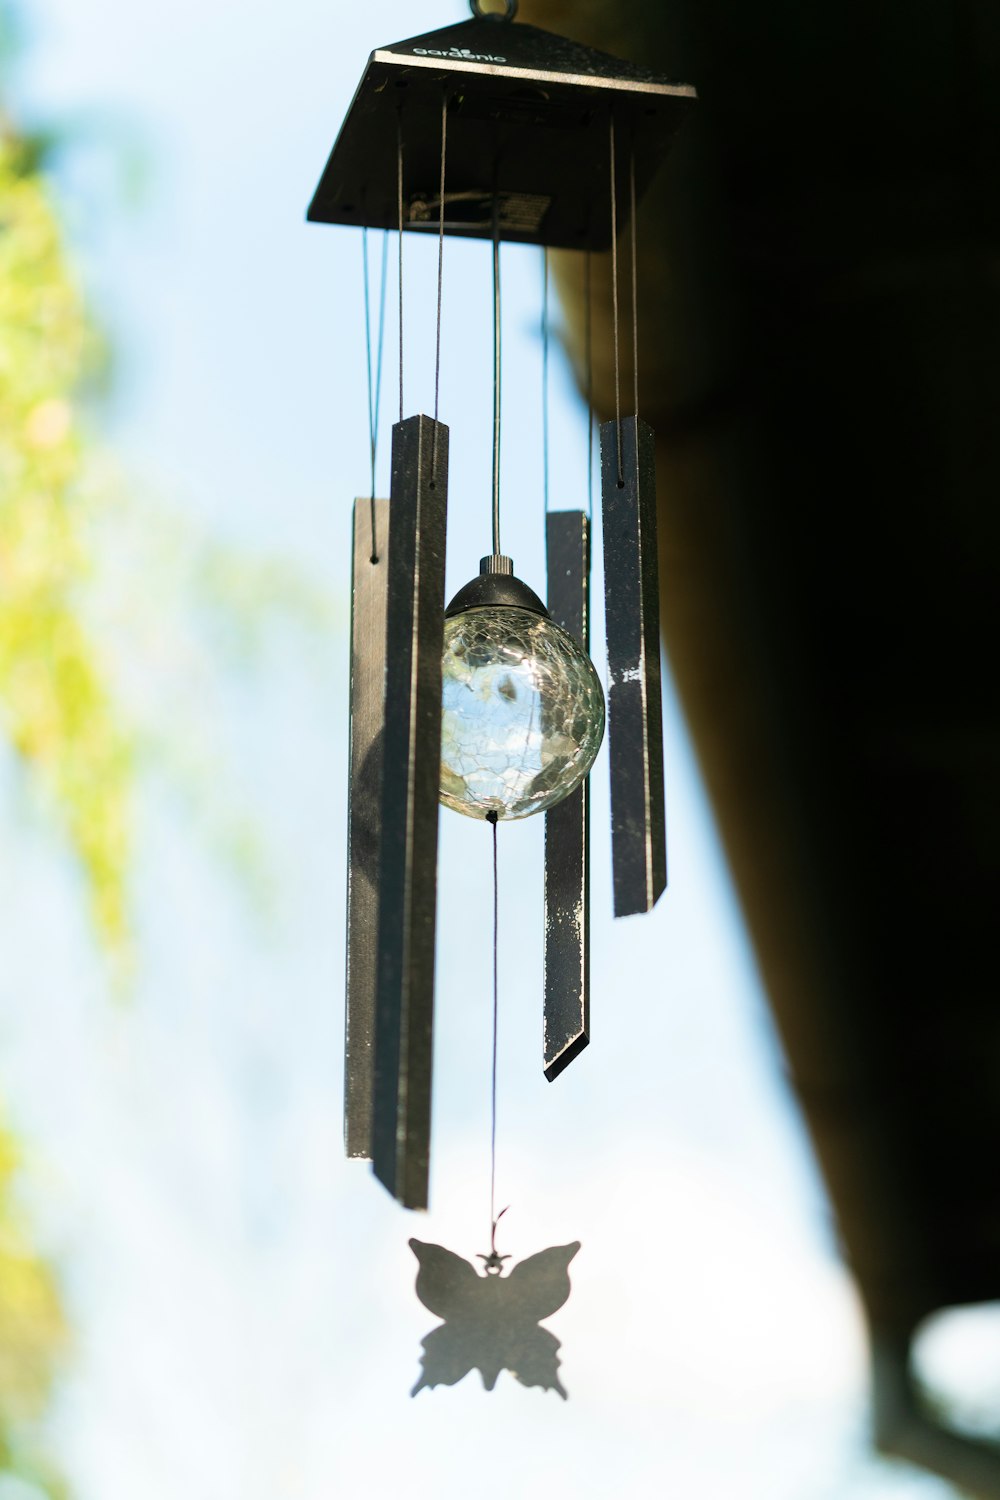 clear glass hanging ball on black metal rack